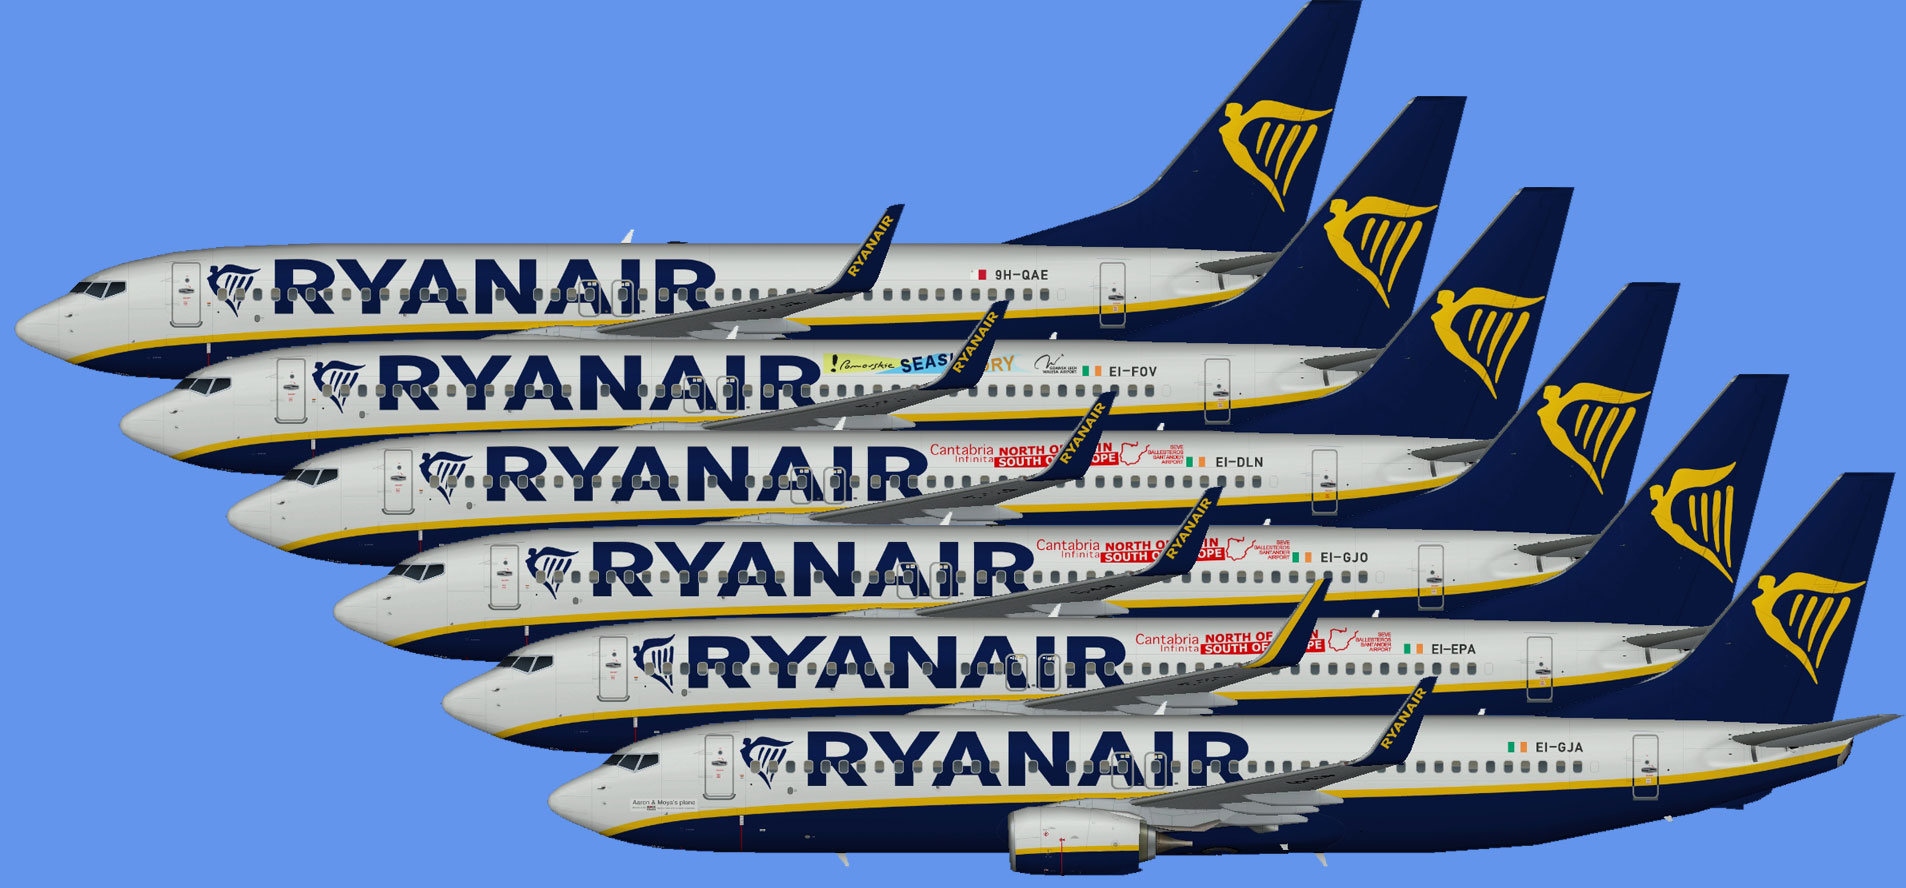 Ryanair 737-800 fleet update 2019